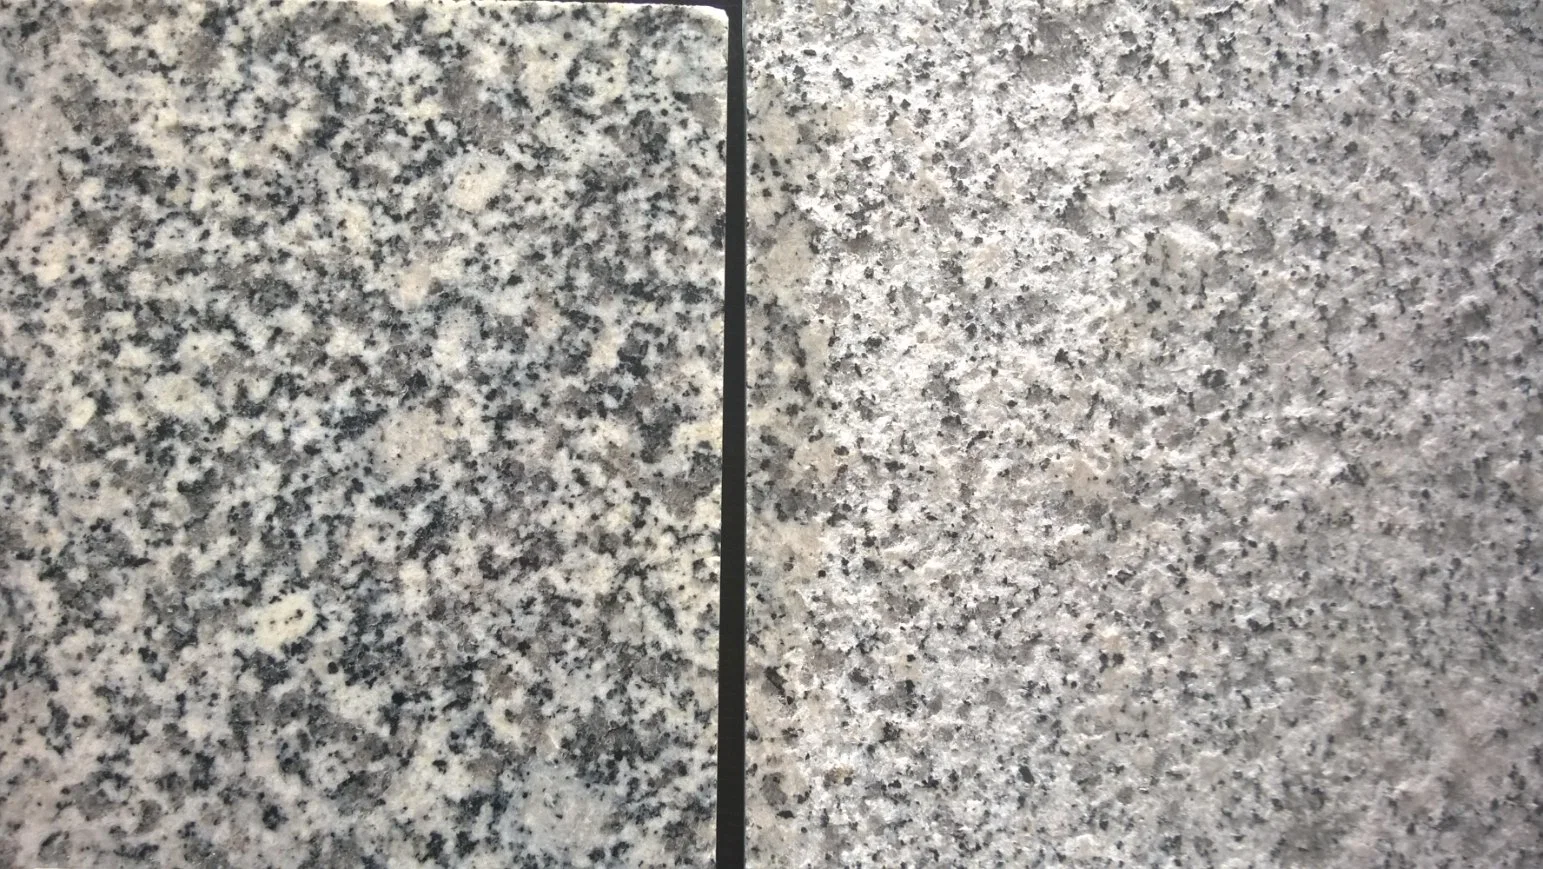 Polished Black Galaxy Granite Tile for Flooring/Wall